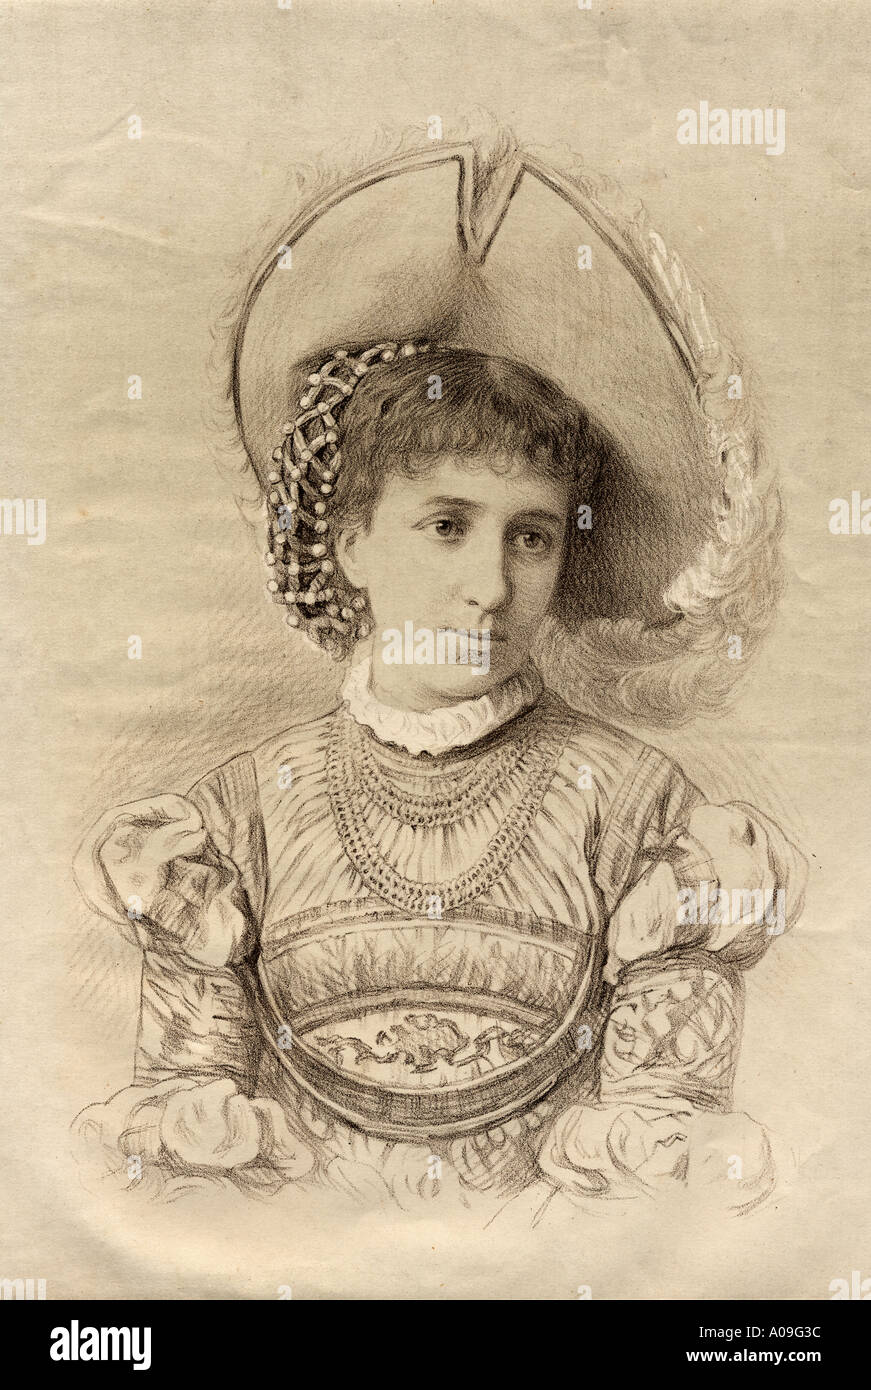 Maria Cristina Deseada Enriqueta Felicidad Raniera de Habsburgo Lorena, 1858-1929. Archduchess of Austria and Queen of Spain as the wife of Alfonso XI. Stock Photo